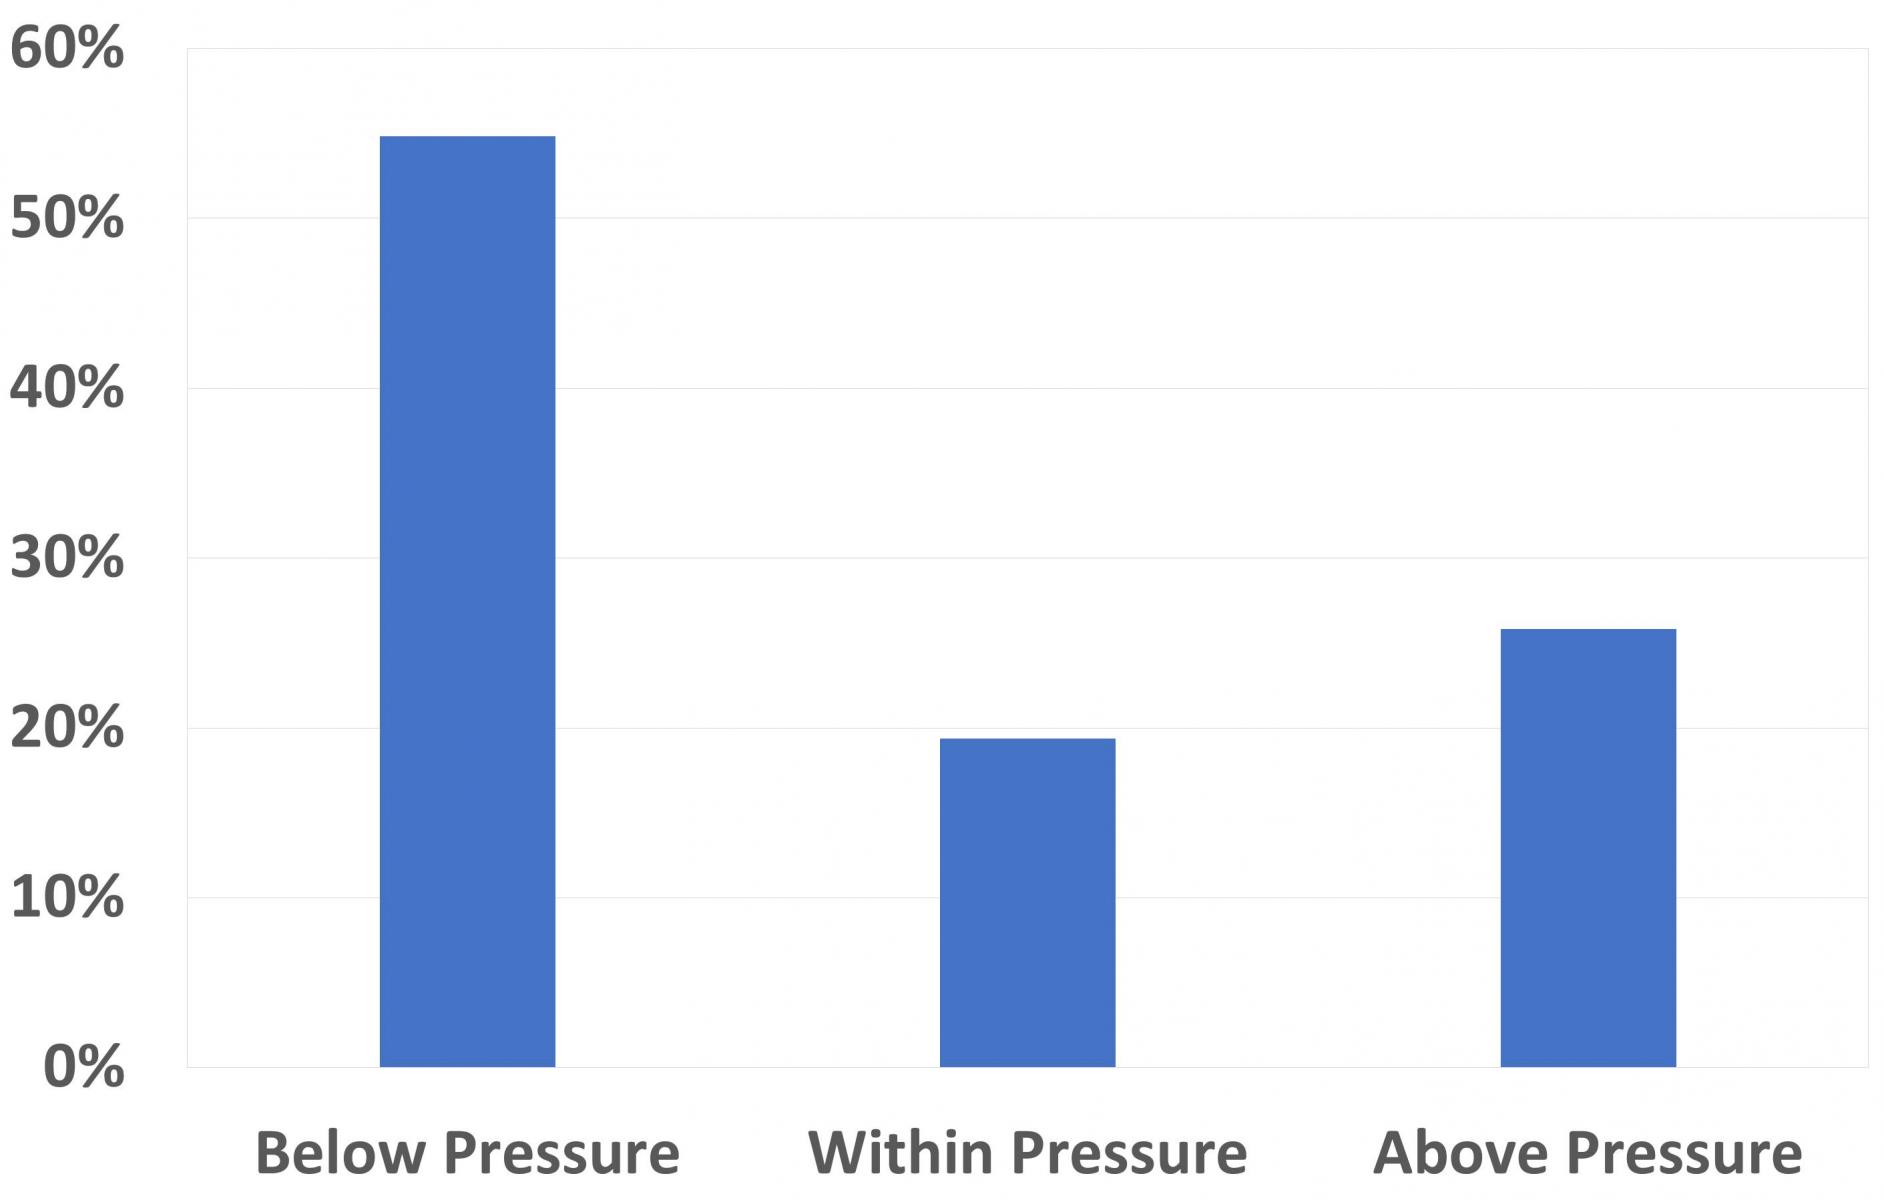 roughly 55% percent below pressure, 20% within pressure, 25% above pressure